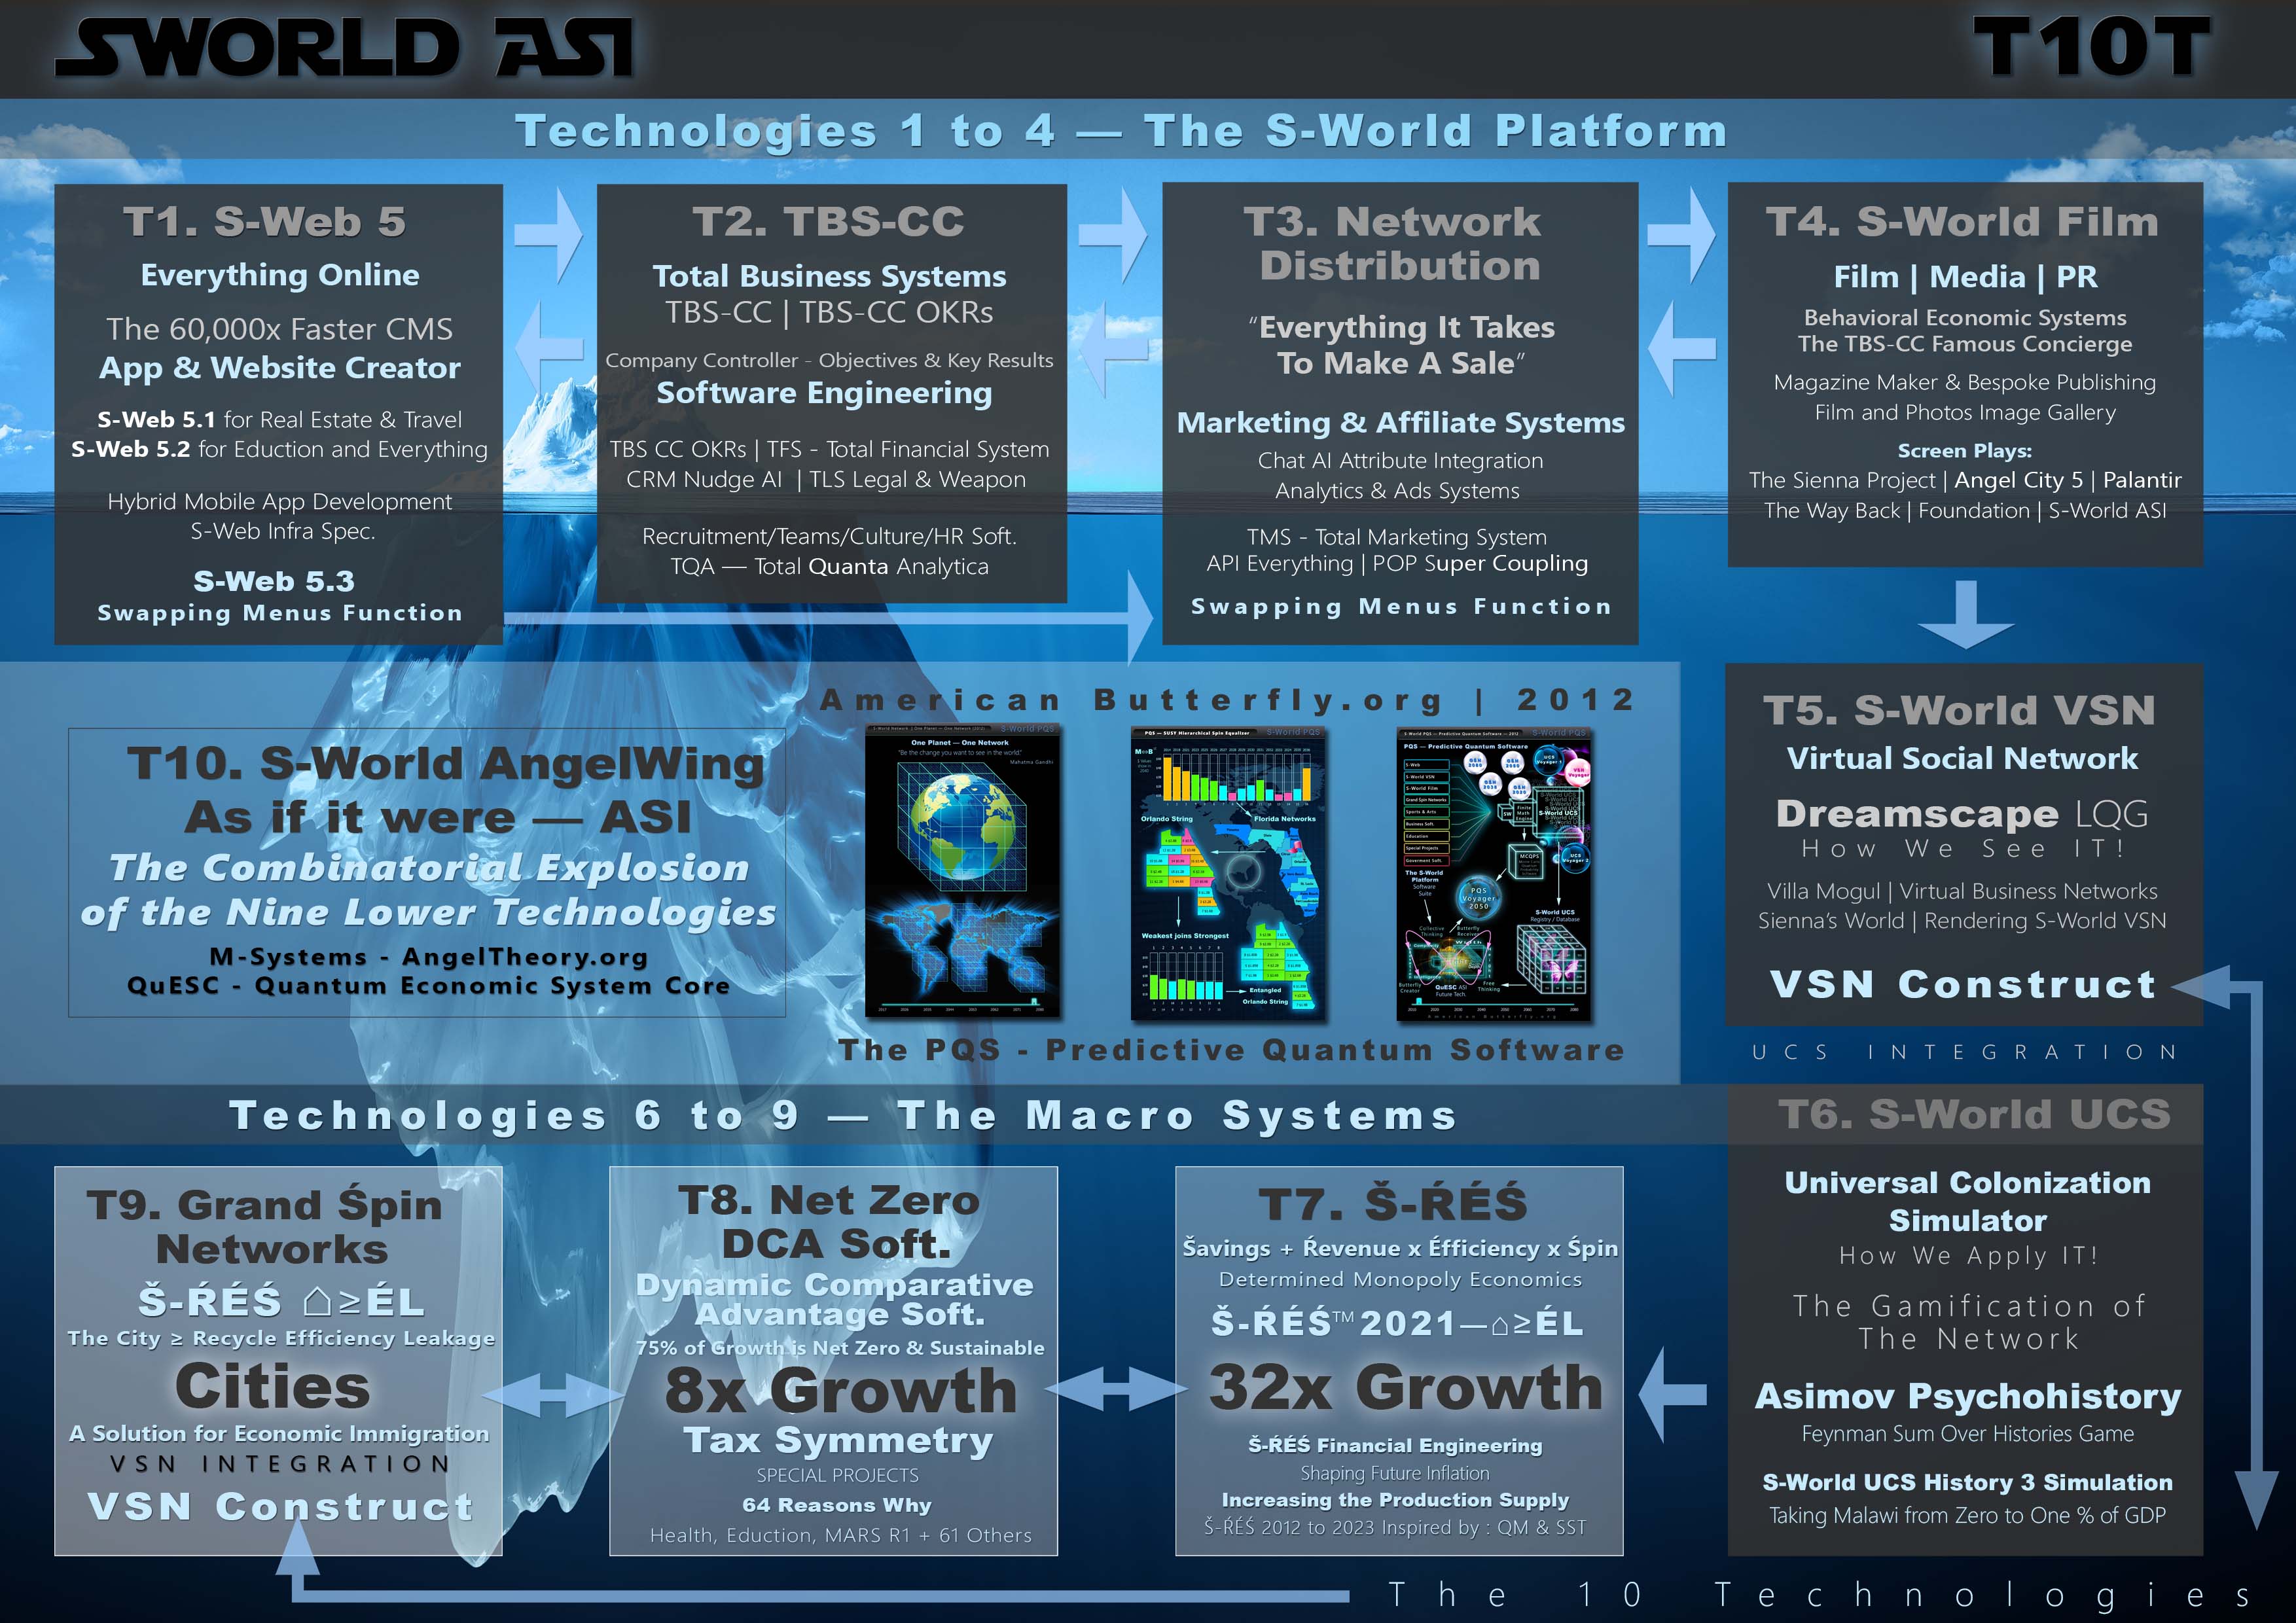 S-World ASI - The 10 Technologies - v1.10b - Iceberg - Jedi Font Blue Outline (Sienna's Angel Birthday) - A4 (1 Aug 2023)